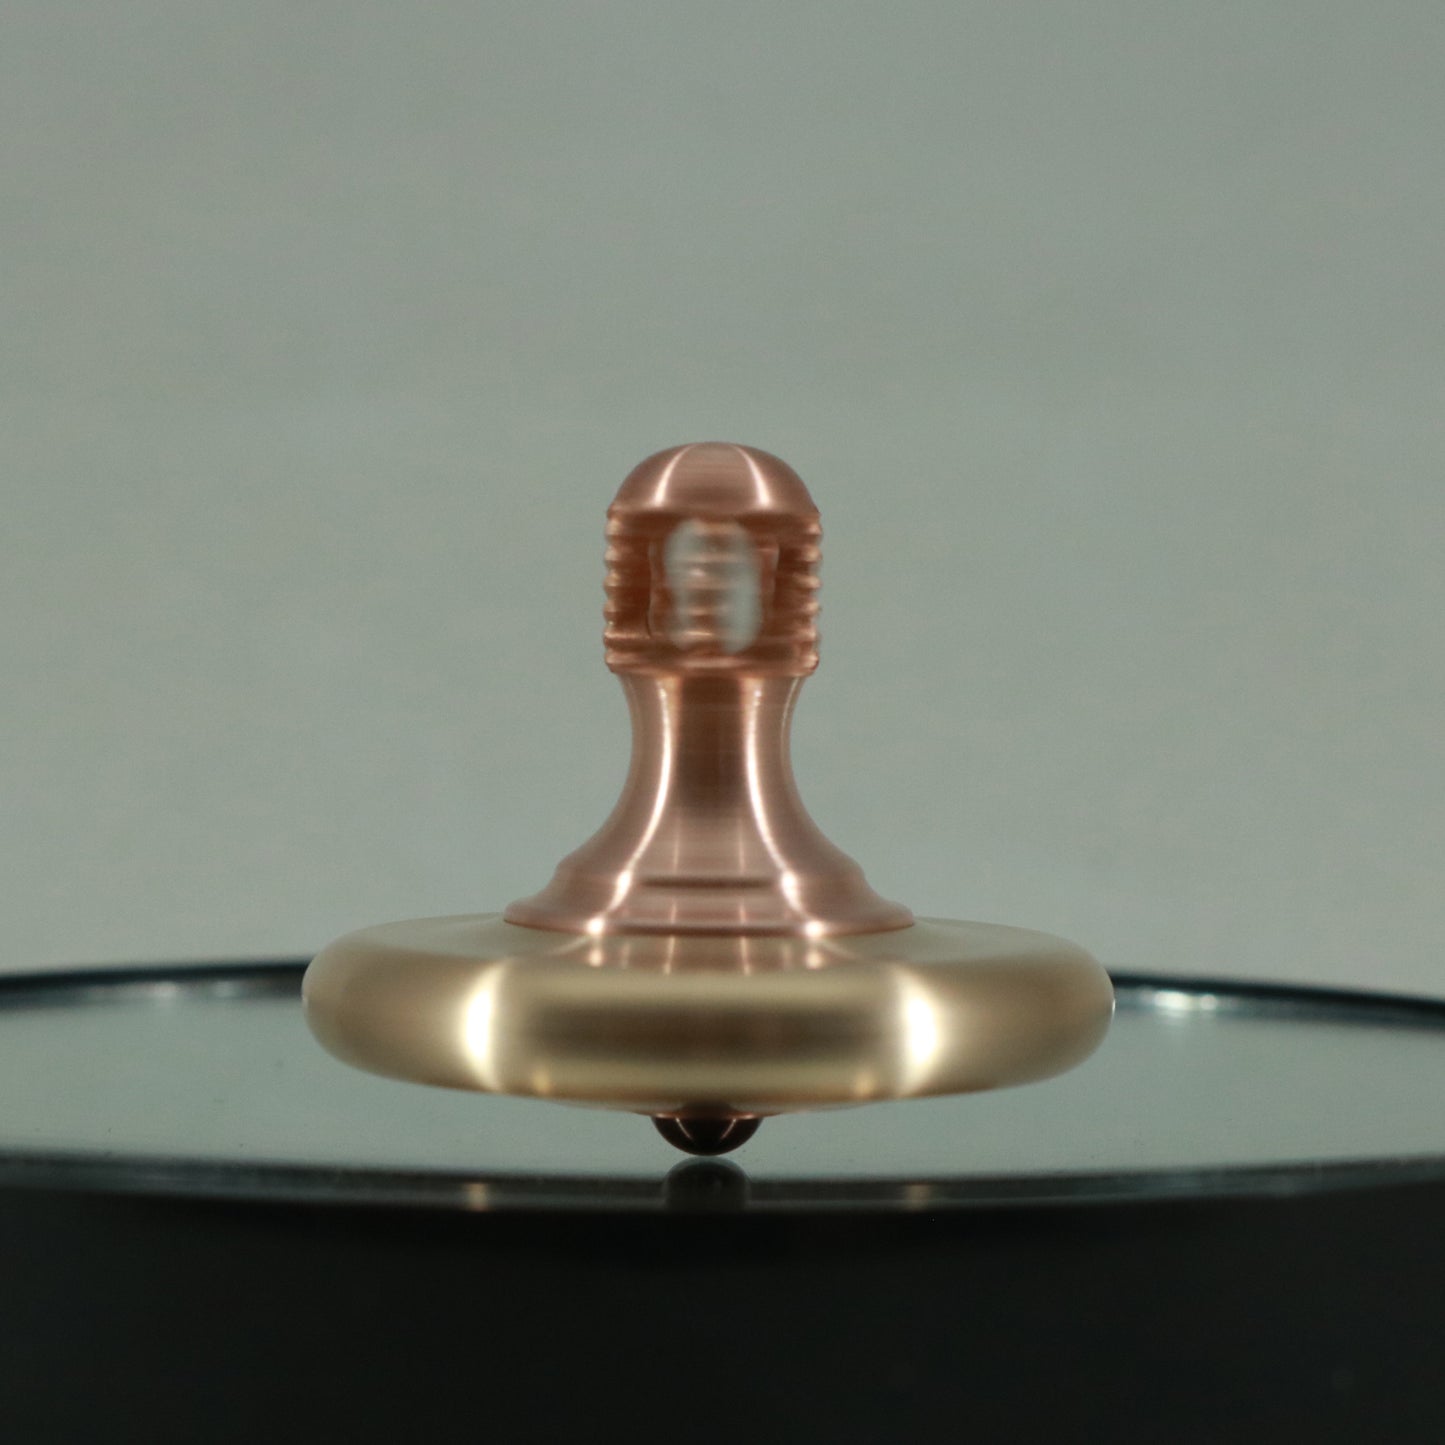 M3 - Brushed Phosphor Bronze and Copper Spinning Top Super Grip